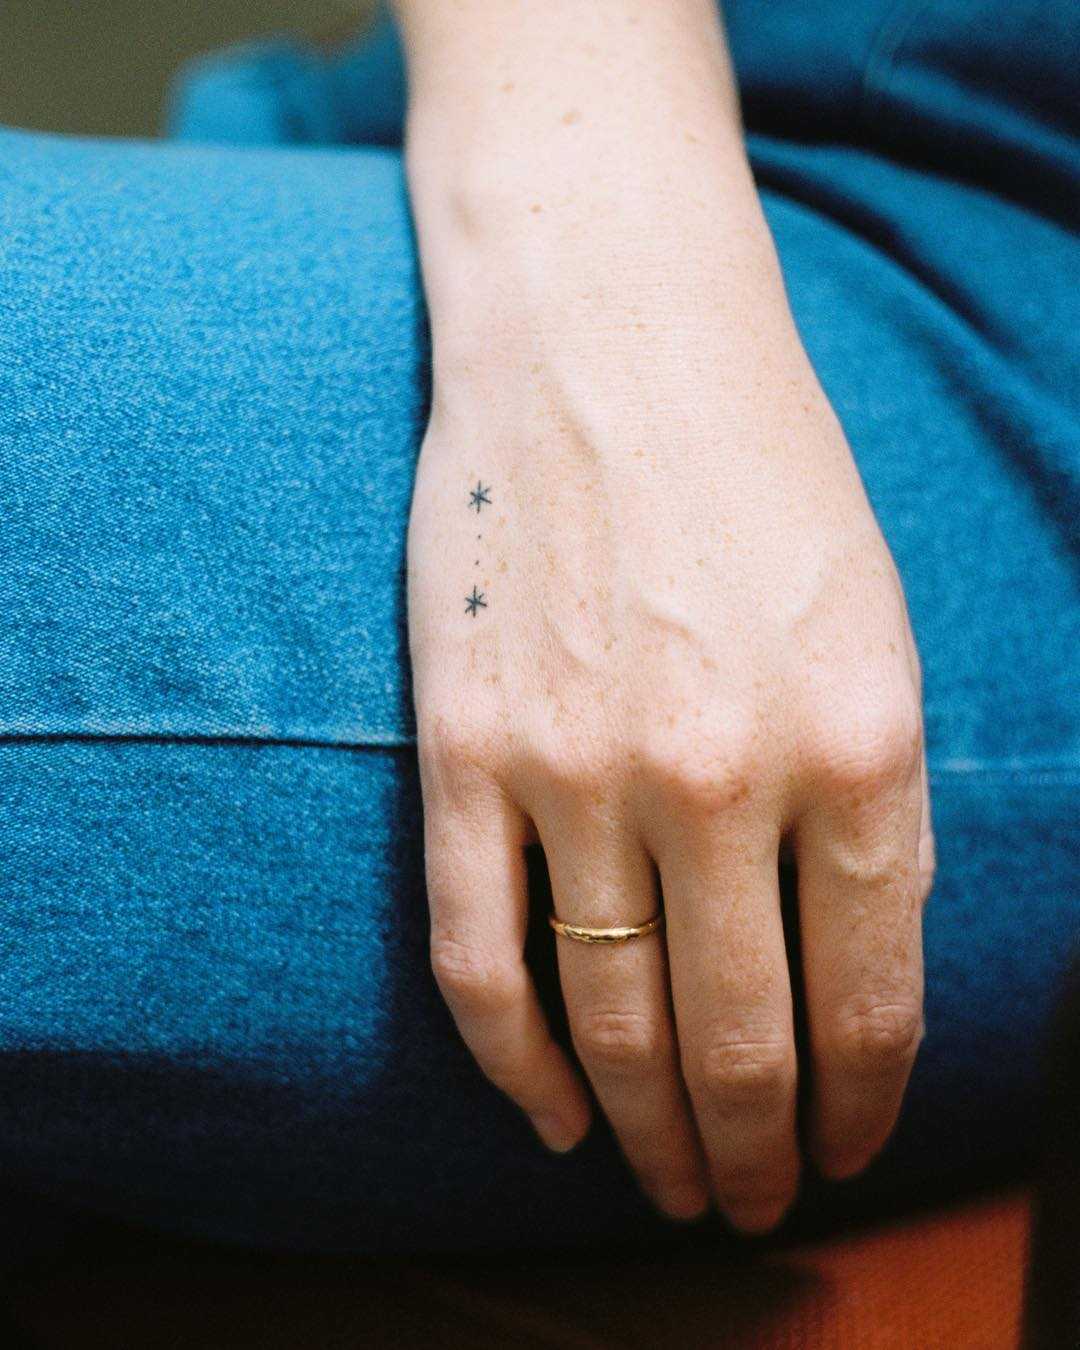 Tiny stars tattoo by Stanislava Pinchuk